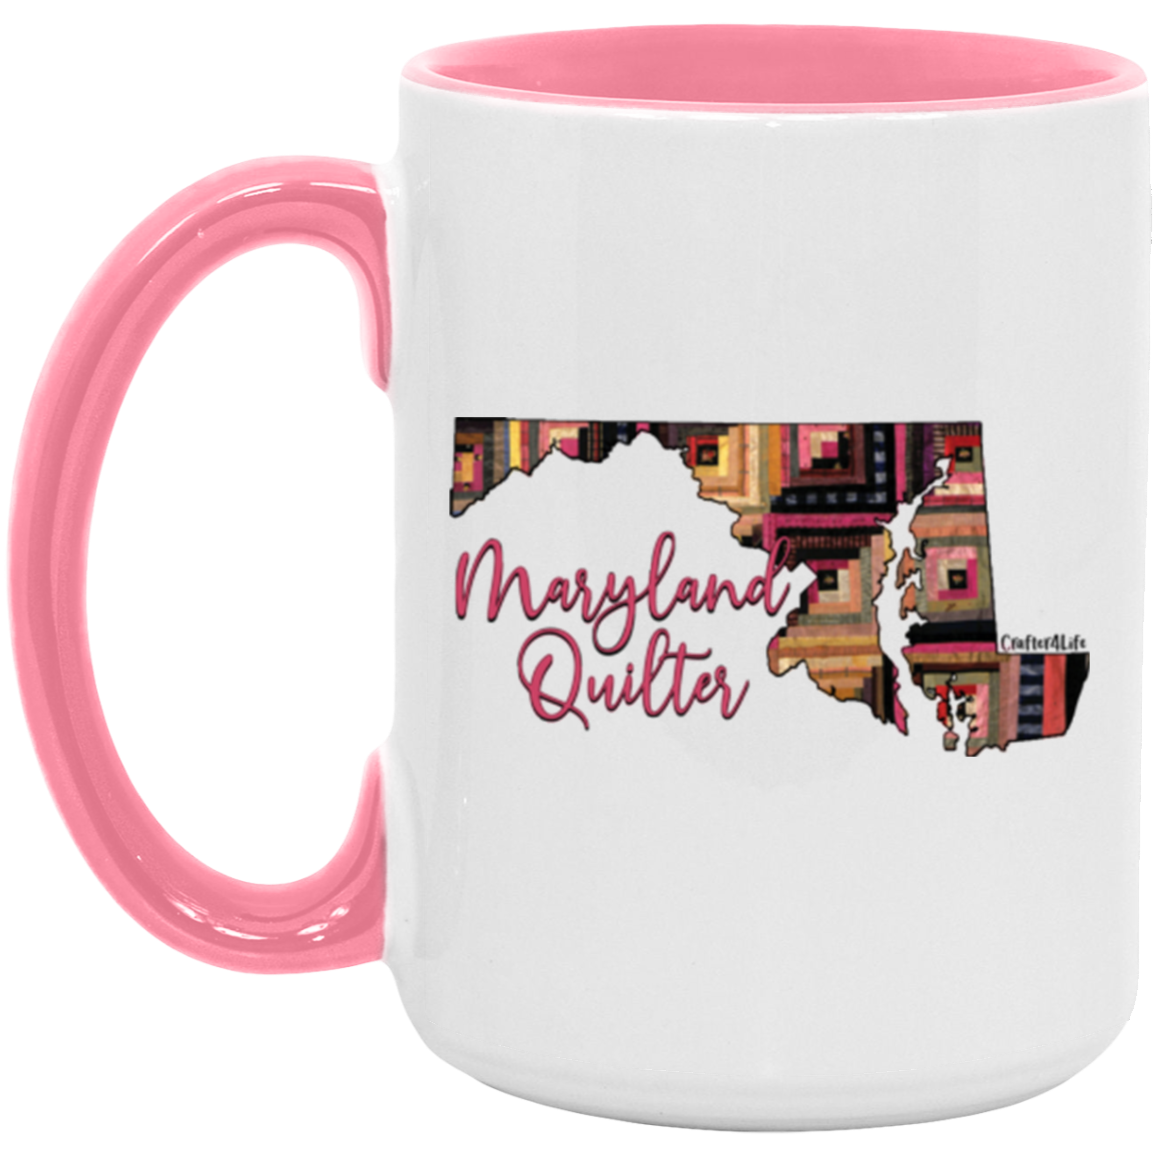 Maryland Quilter Mugs